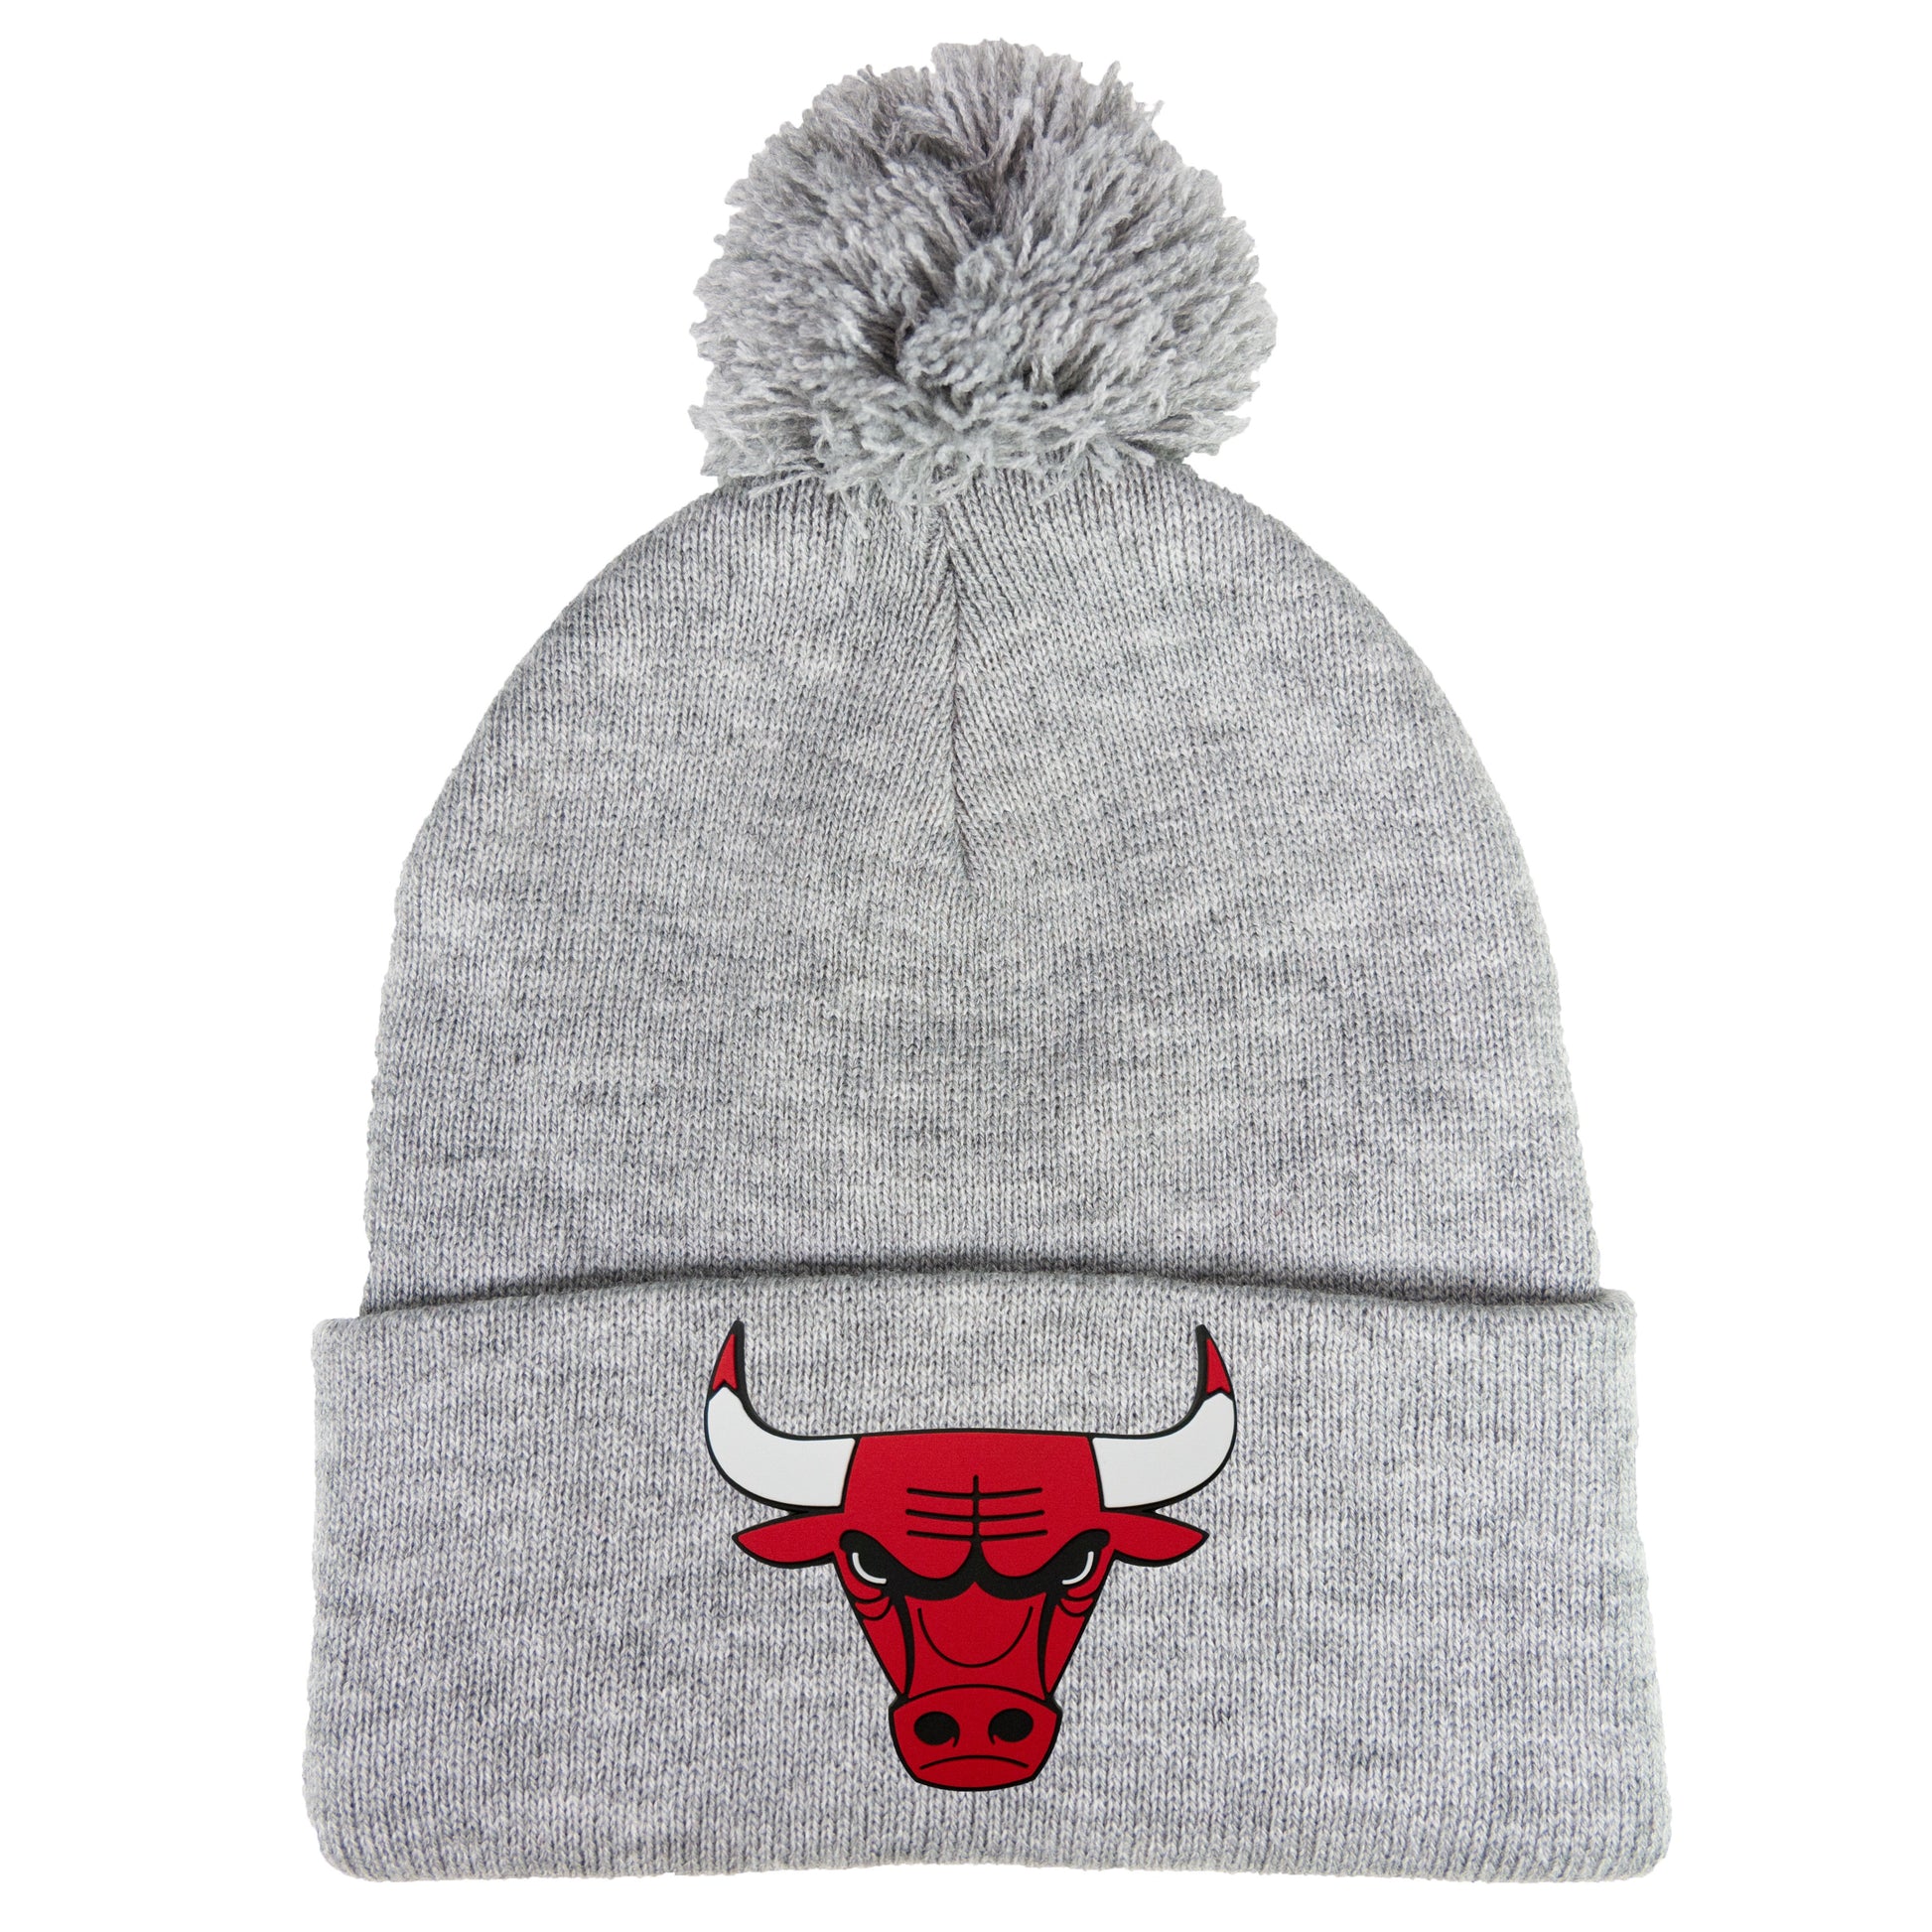 Chicago Bulls 3D  12 in Knit Pom-Pom Top Beanie- Heather Grey - Ten Gallon Hat Co.